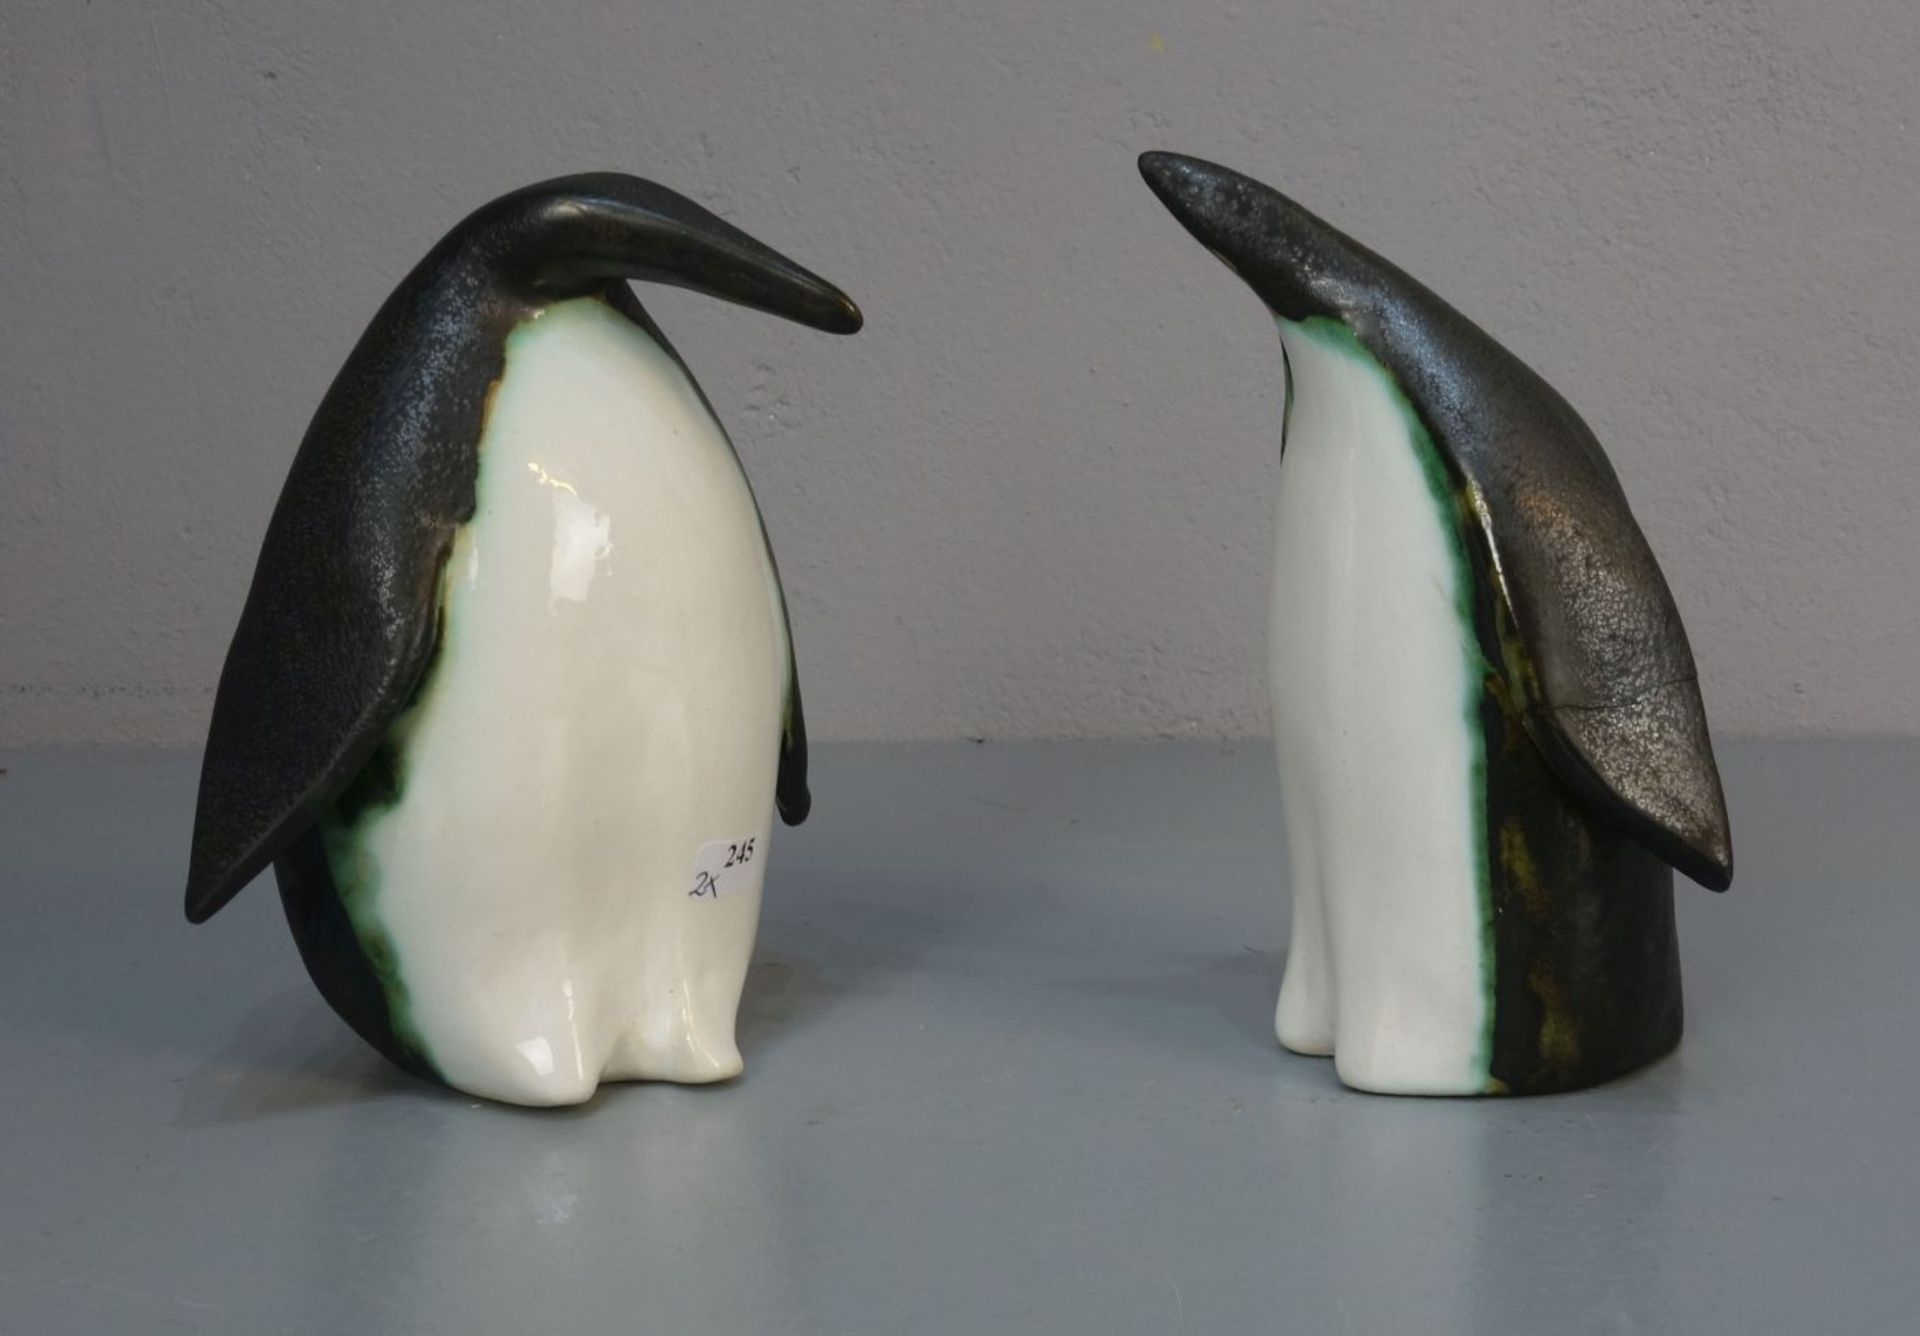 KERAMIKFIGUREN: "Pinguine" / ceramic penguins, Studiokeramik, heller Scherben, weiß, schwarz und